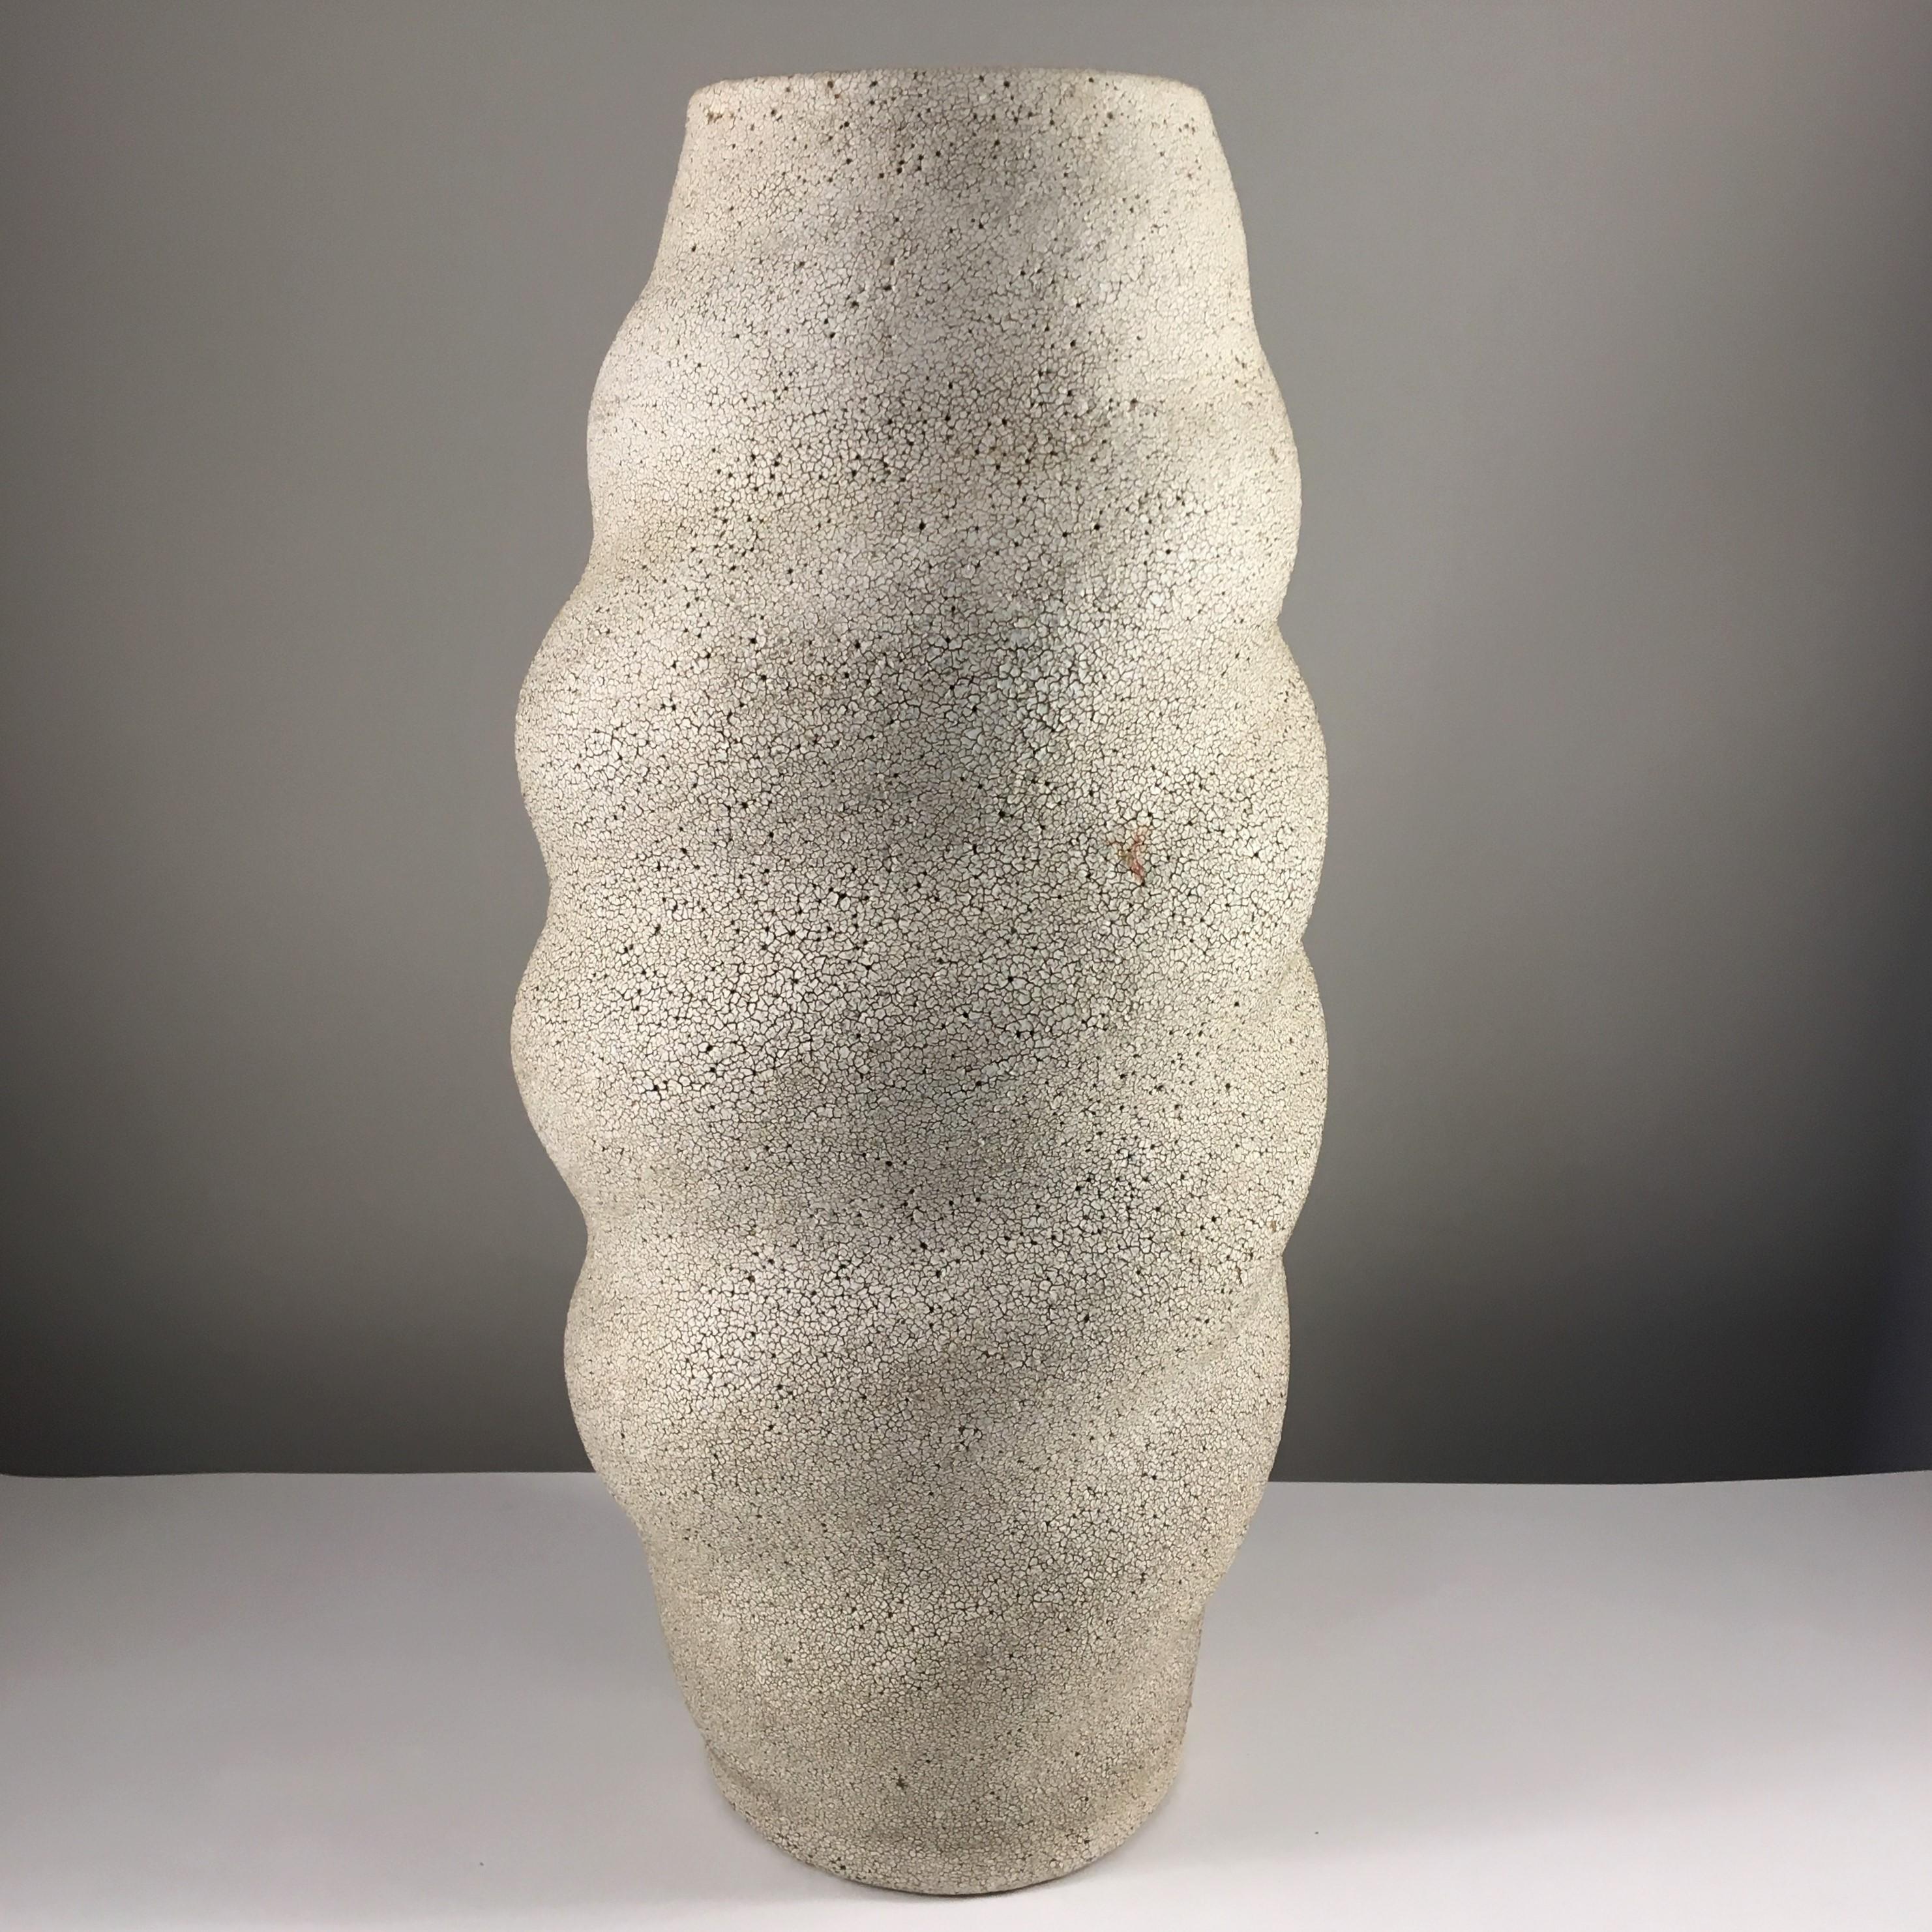 Scuptural Spiral Vase by Yumiko Kuga. Dimensions: H 23